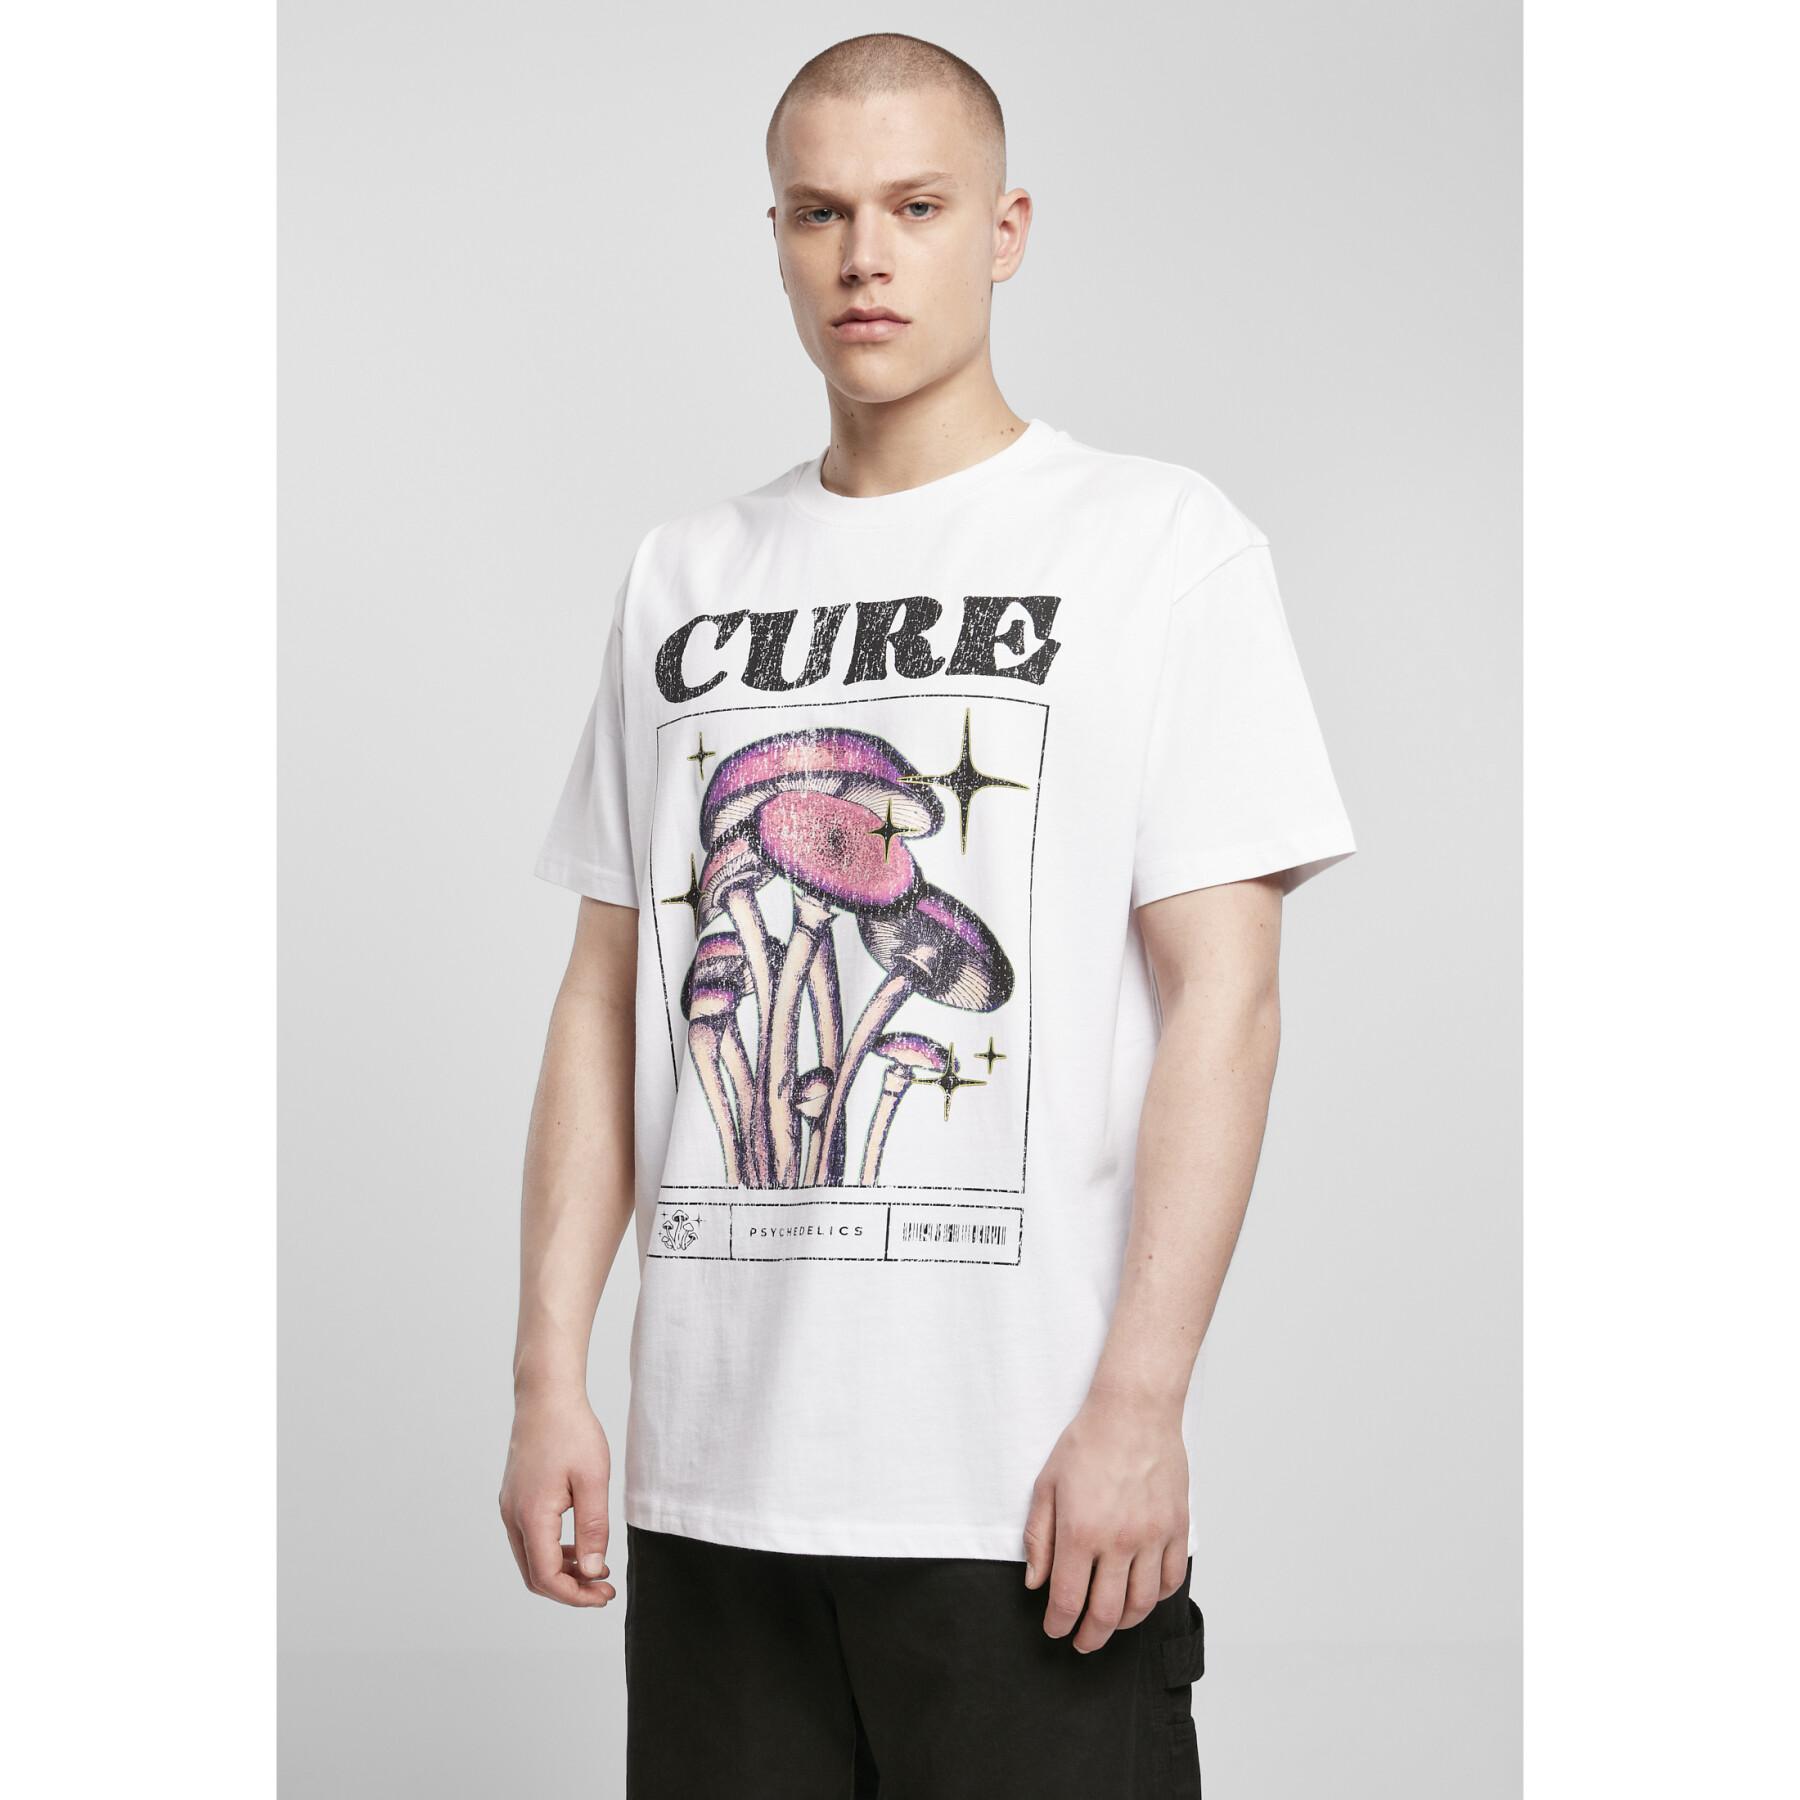 Camiseta Mister Tee Cure Oversize